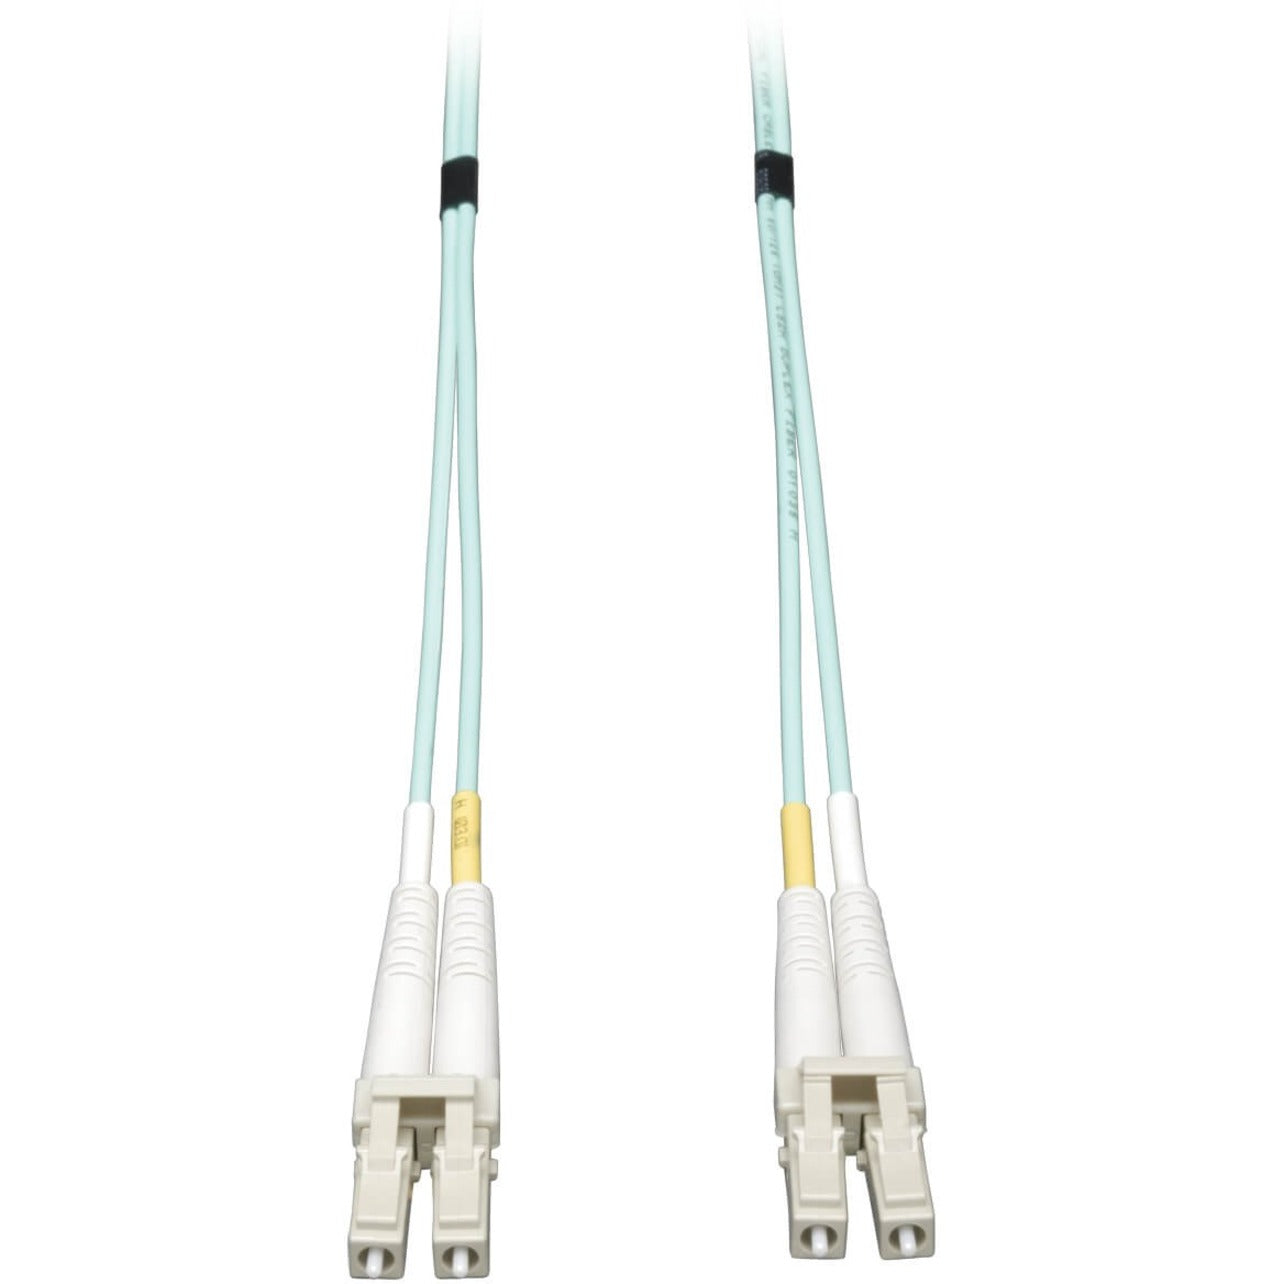 Tripp Lite N820-03M Aqua Doppio Cavo Patch in Fibra 10 ft Velocità Ethernet 10gb